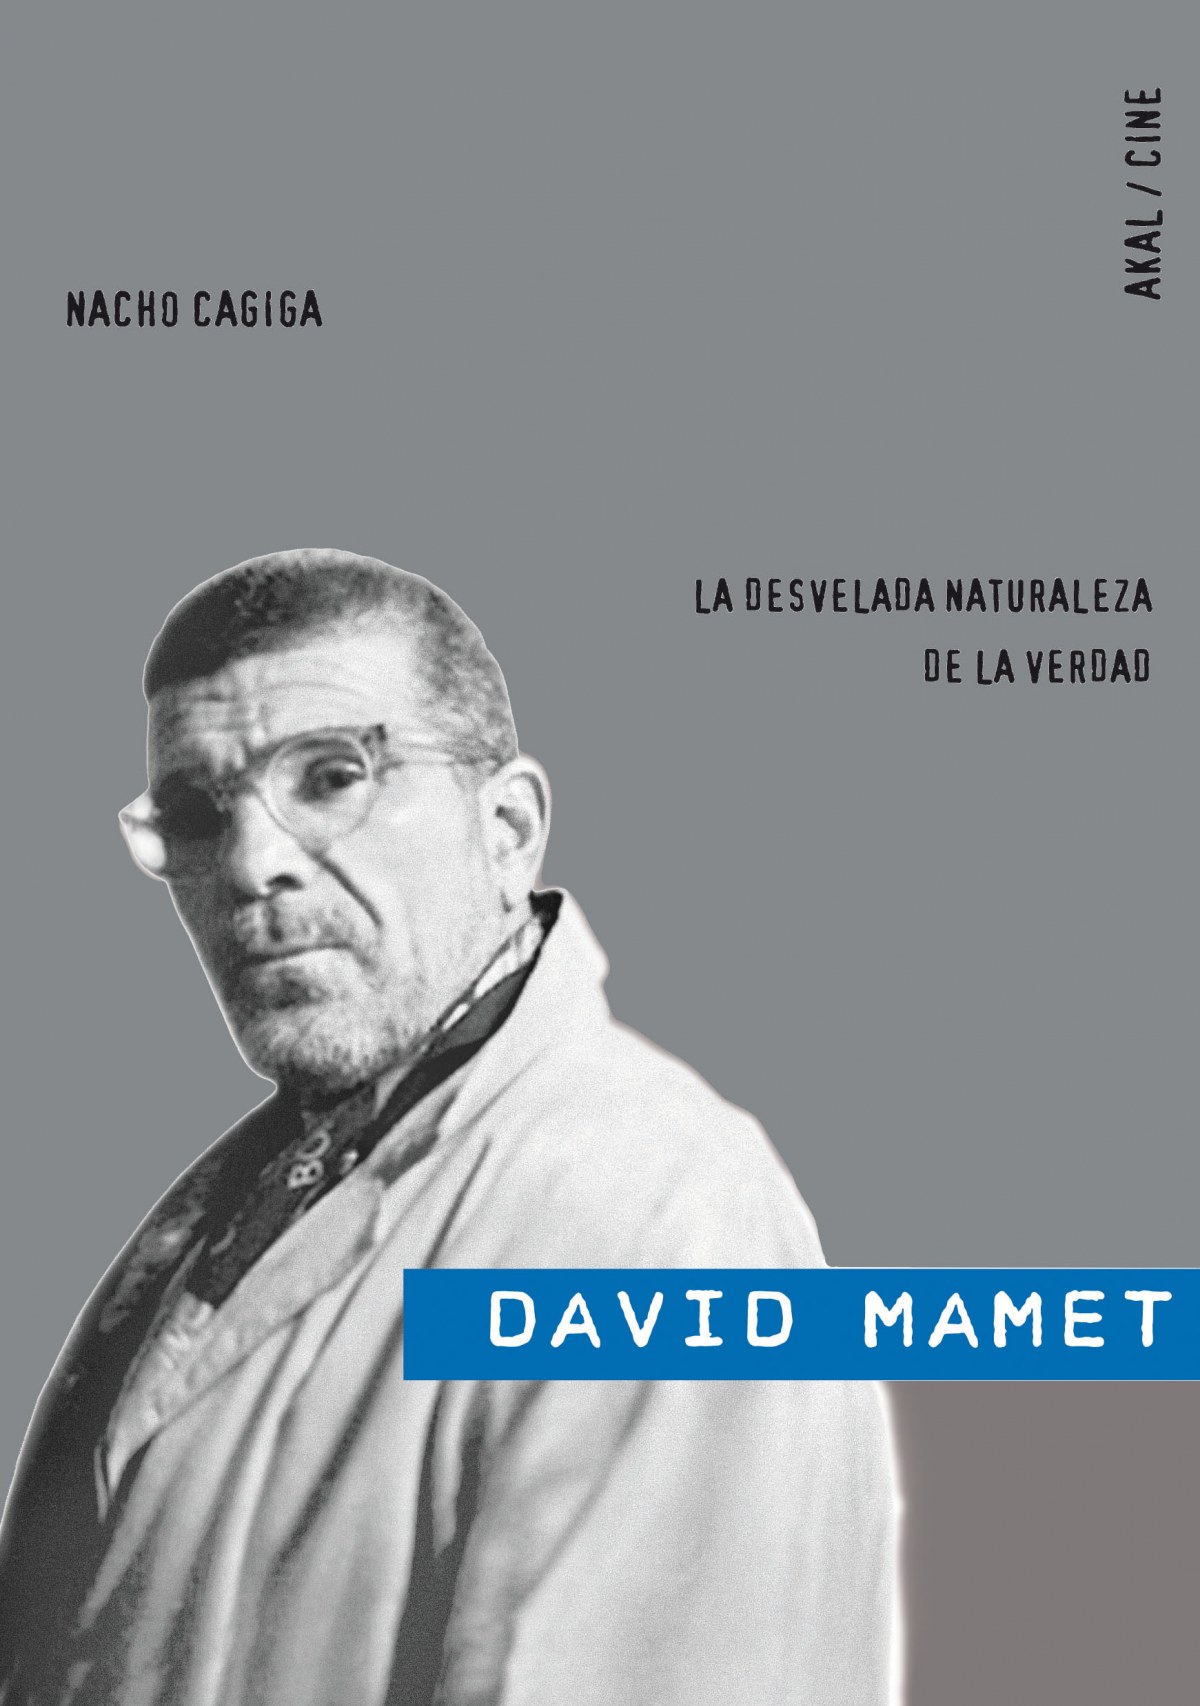 David Mamet - Cagiga, Nacho